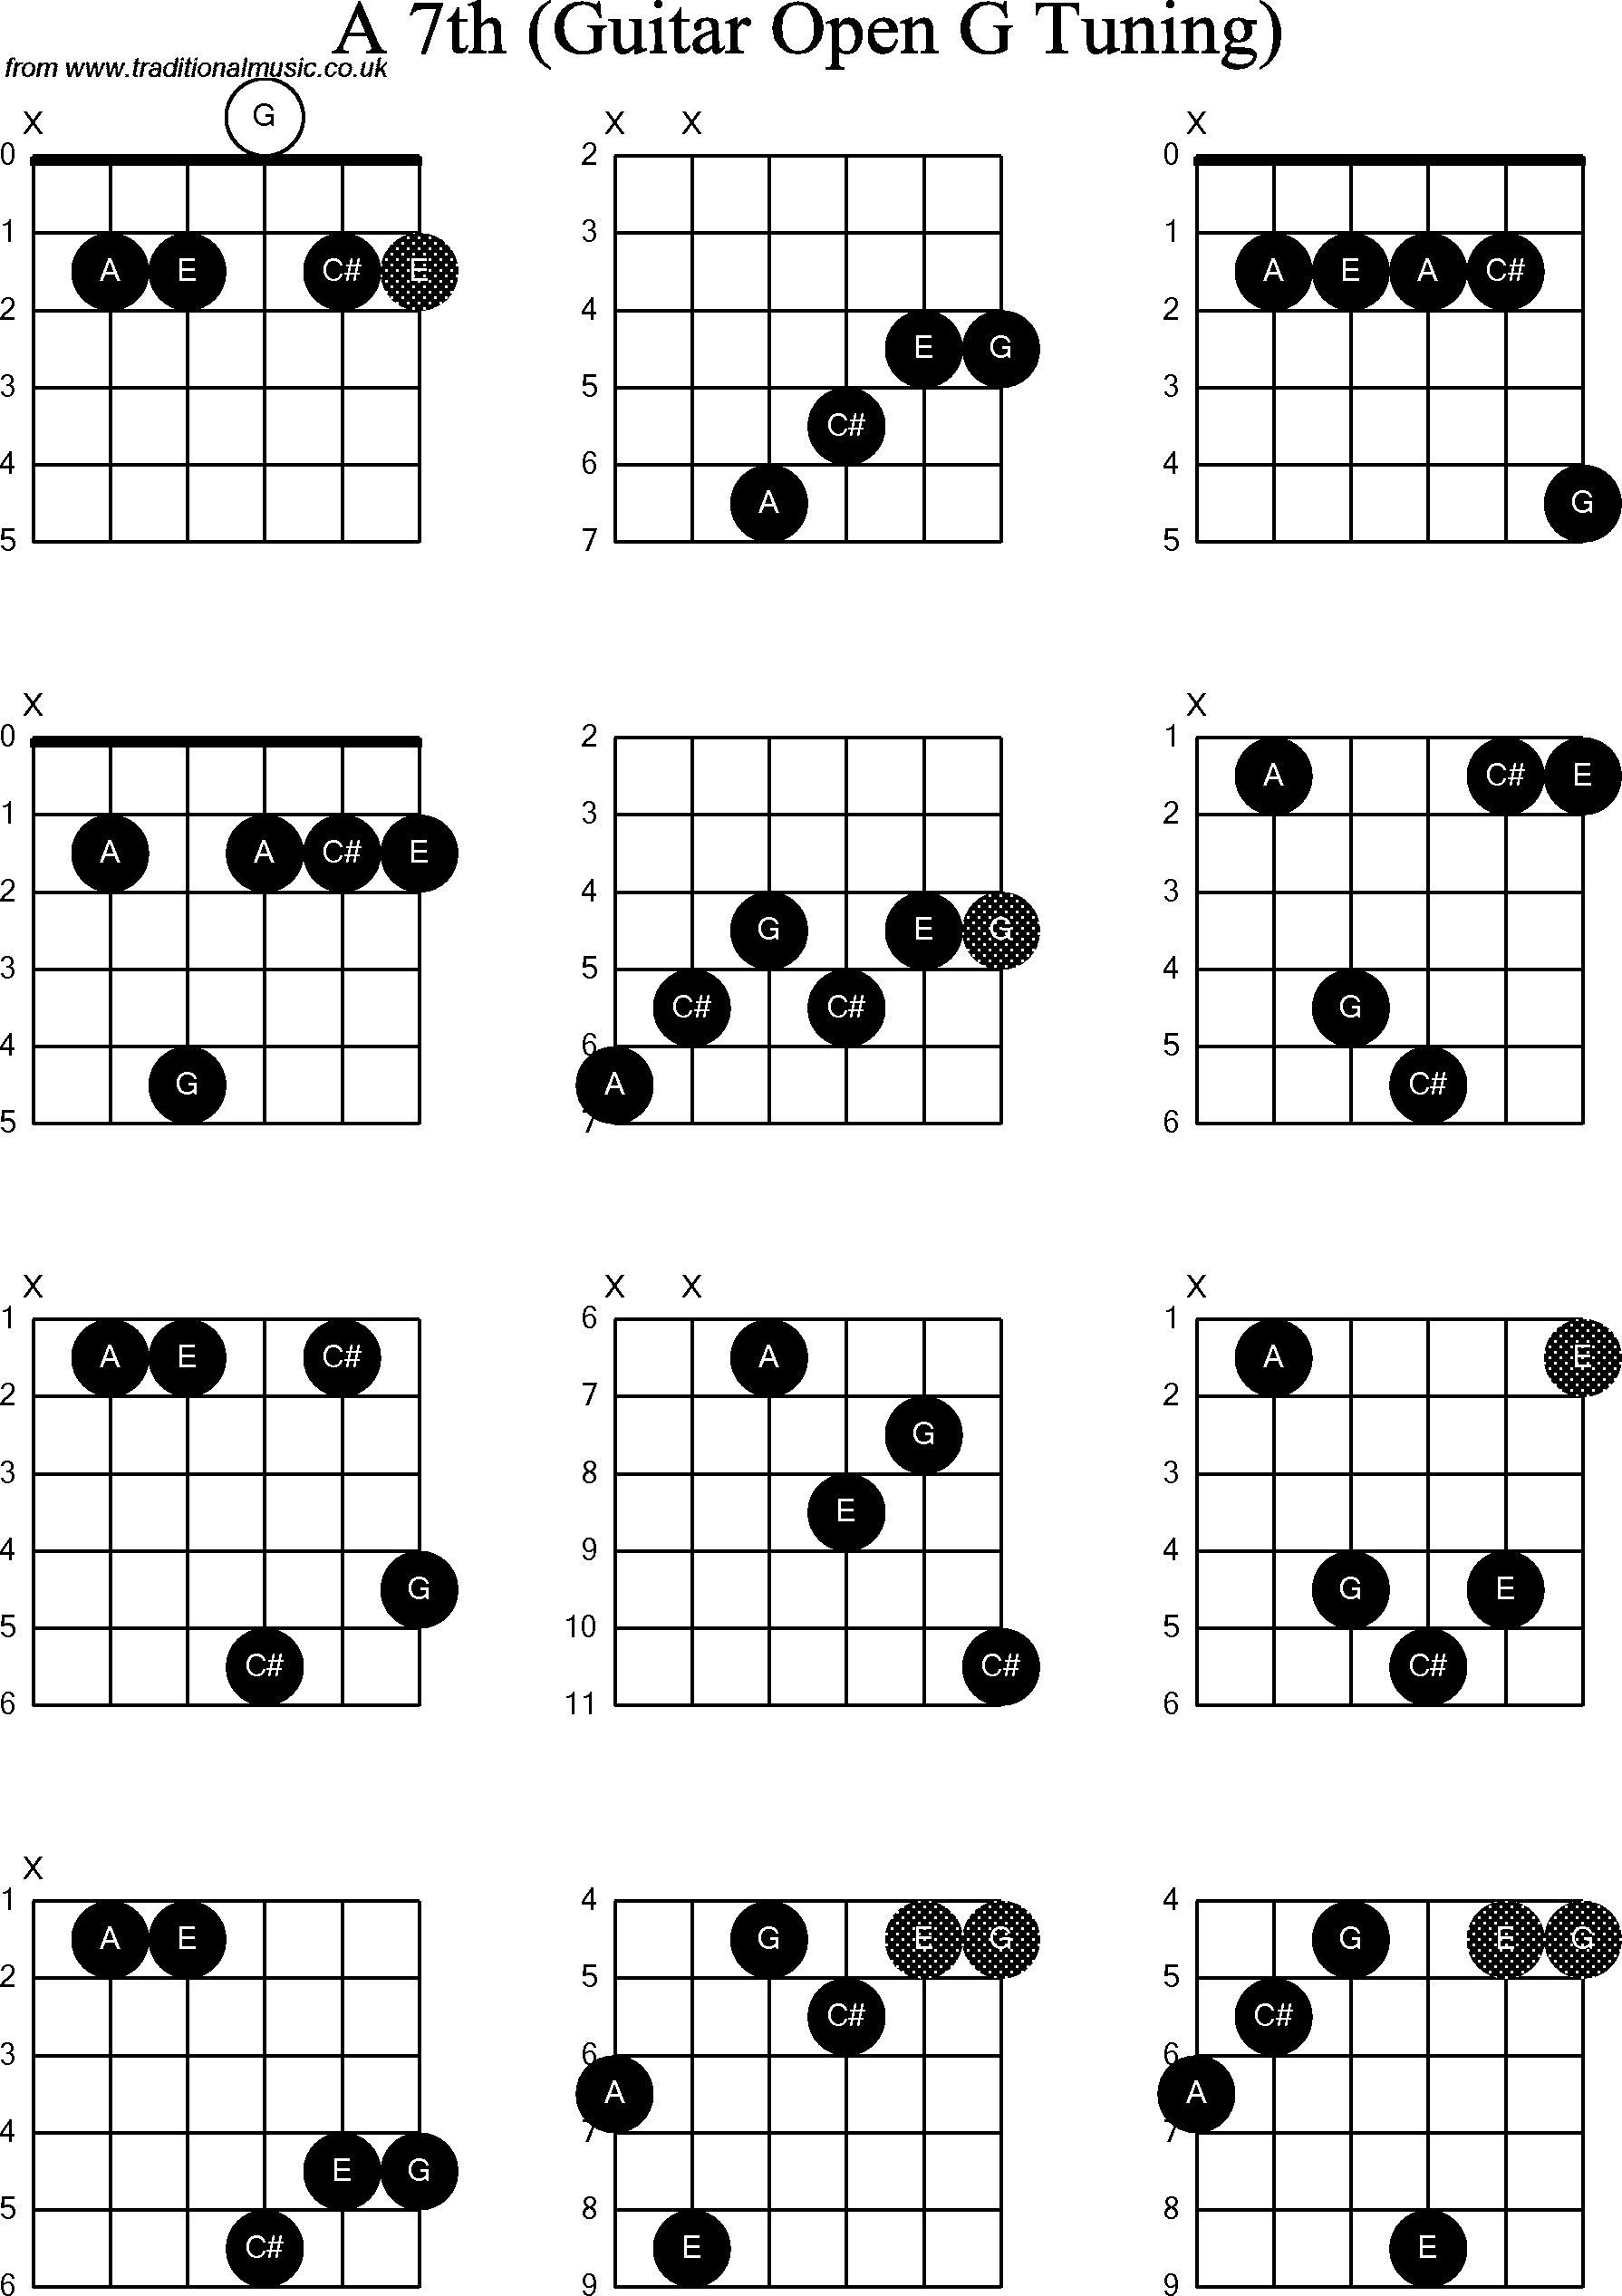 Chord diagrams for Dobro A7th